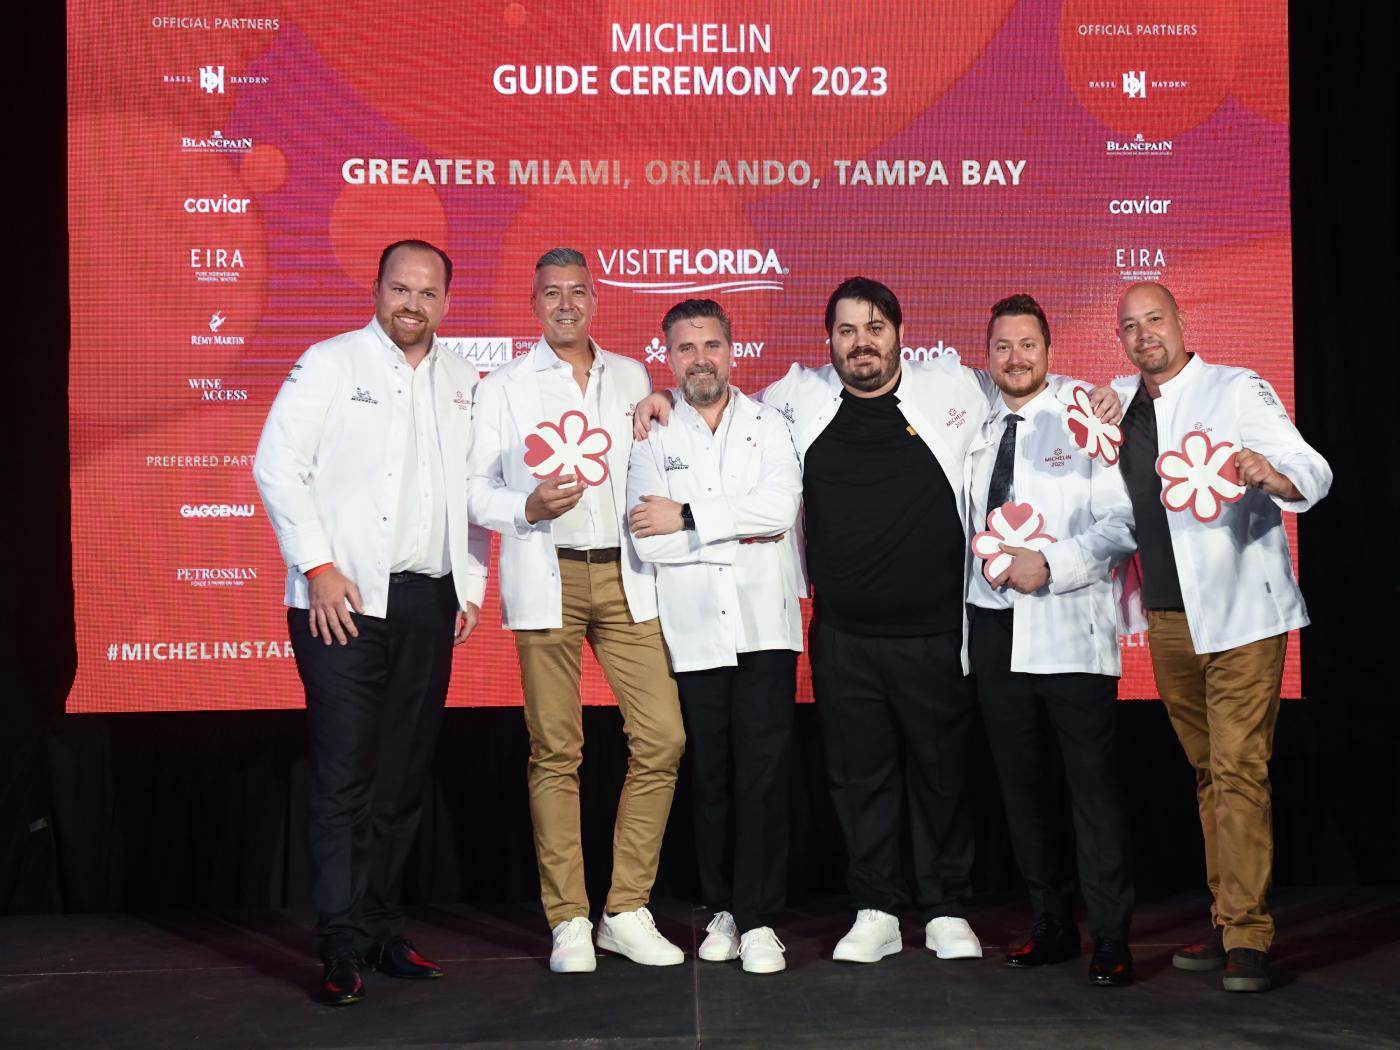 Tampa Bay Restaurants Starstruck At 2023 MICHELIN Guide Ceremony